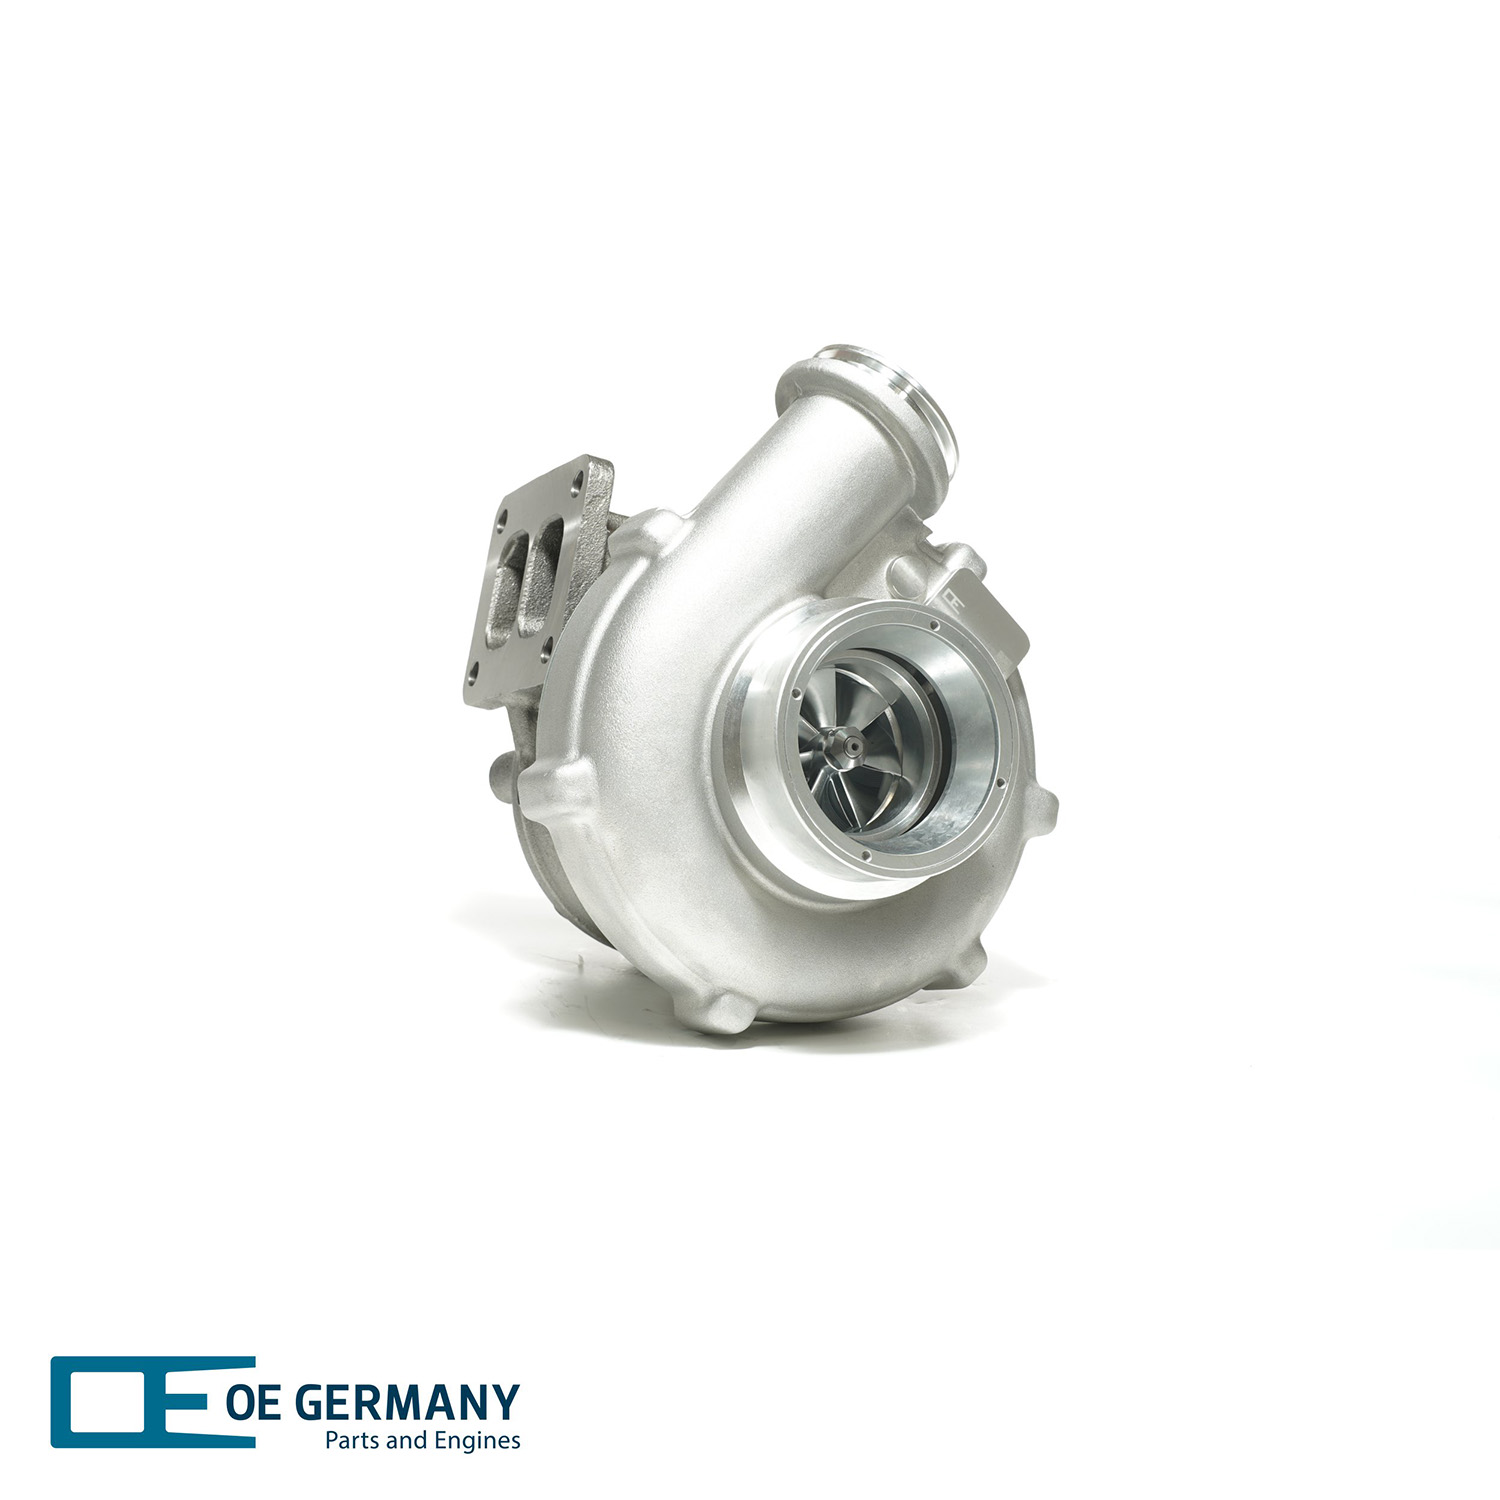 OE Germany Turbolader 02 0960 206600